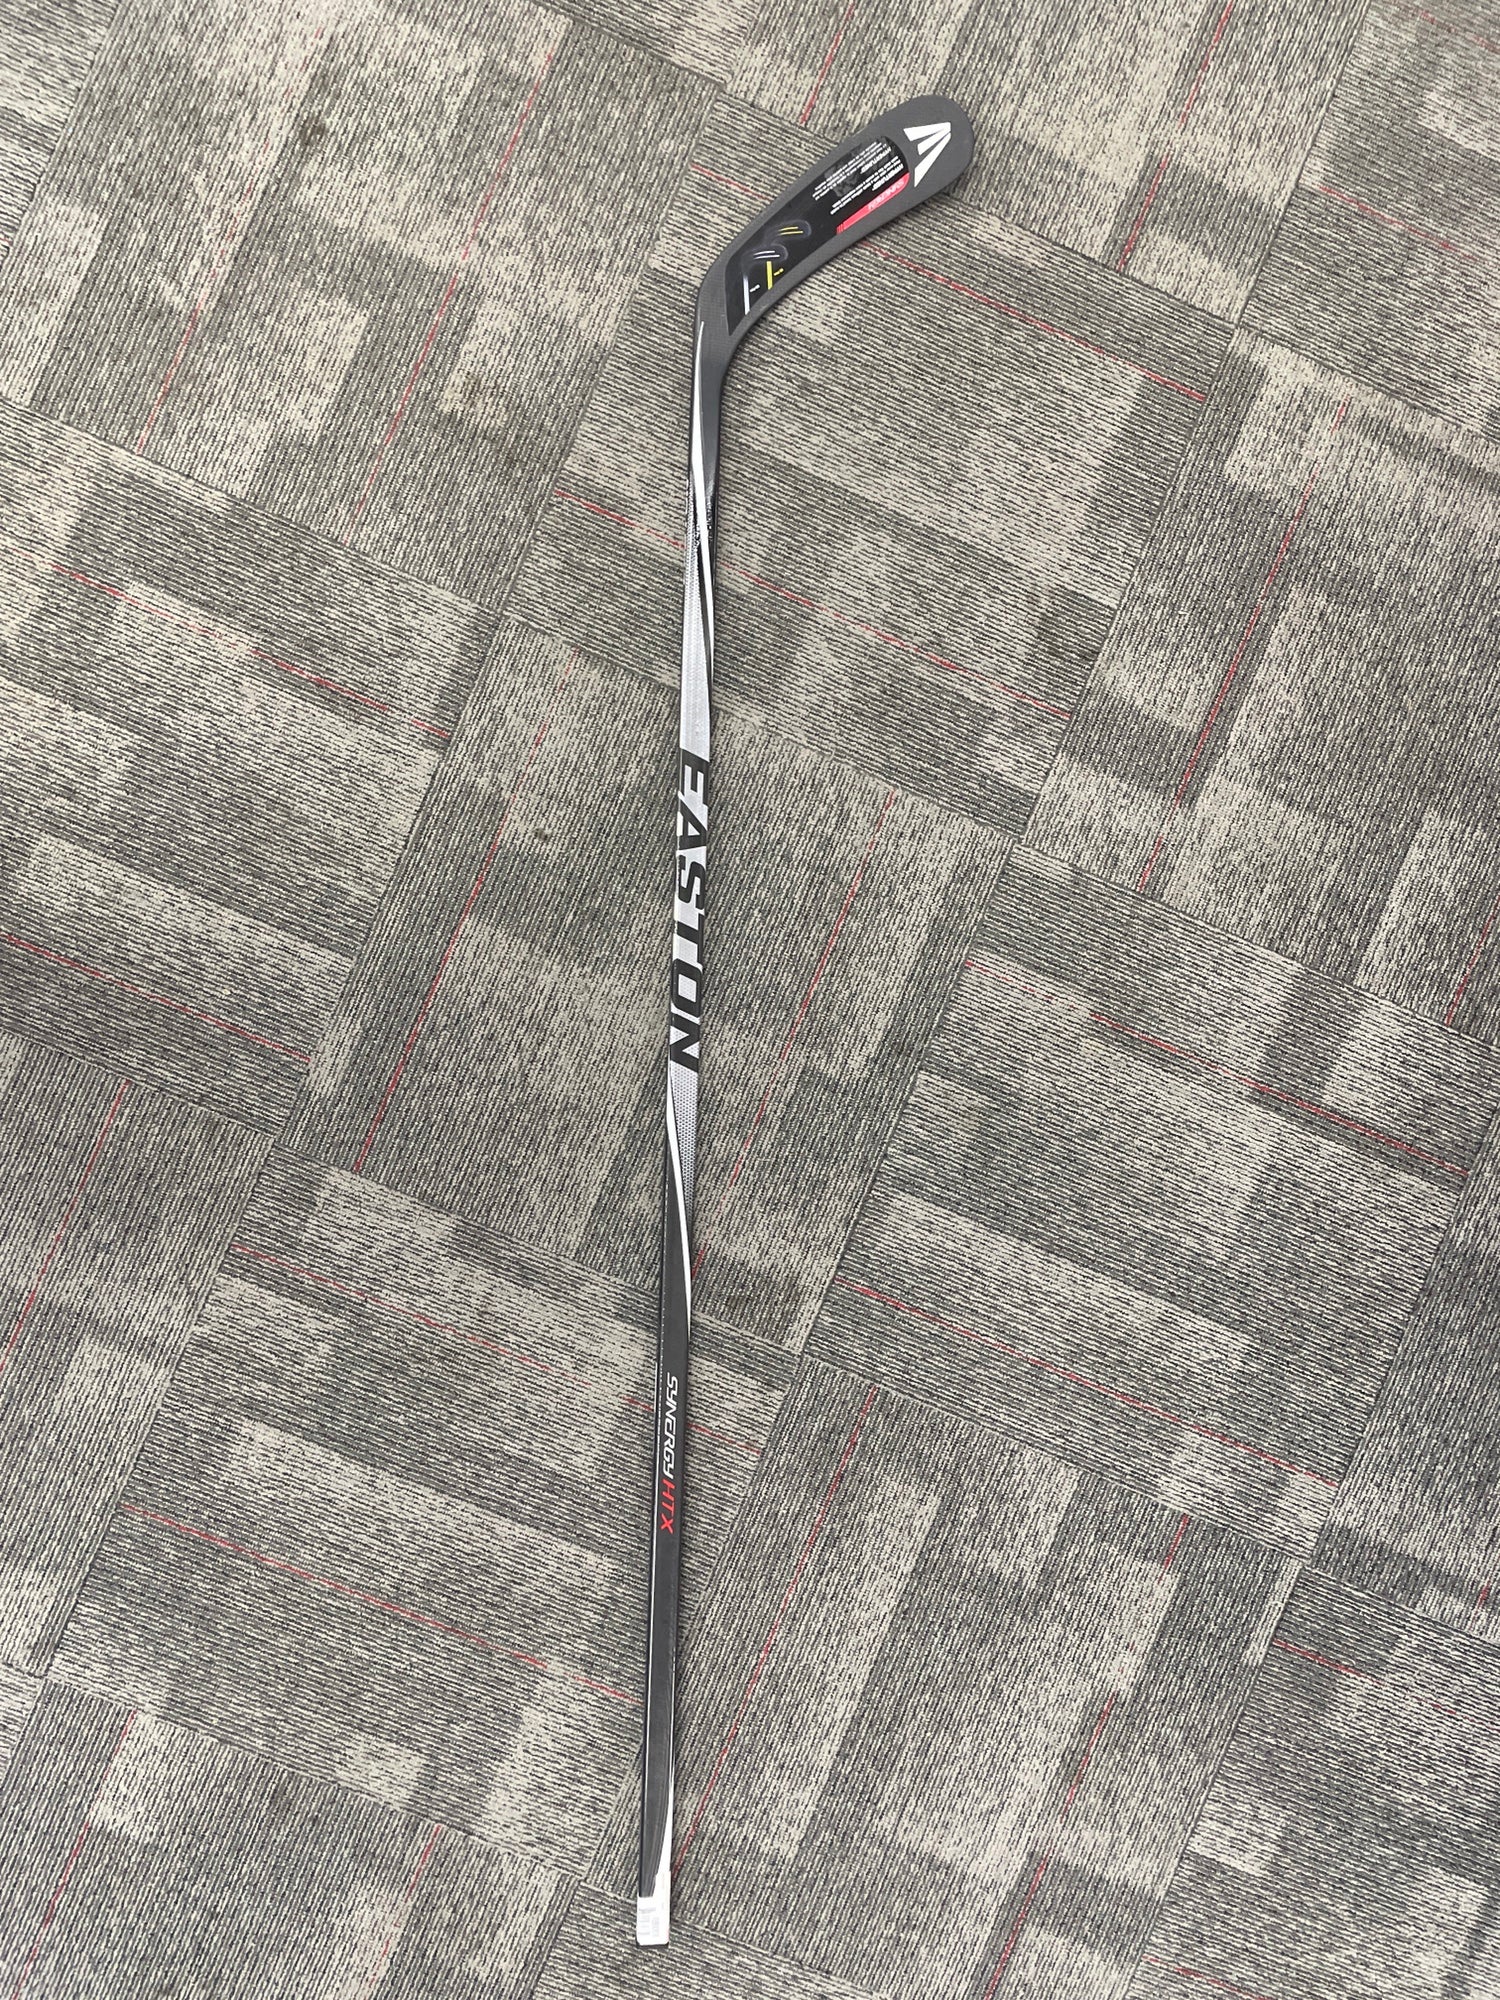 Easton Synergy HTX Hockey Stick, E3, 65, RH